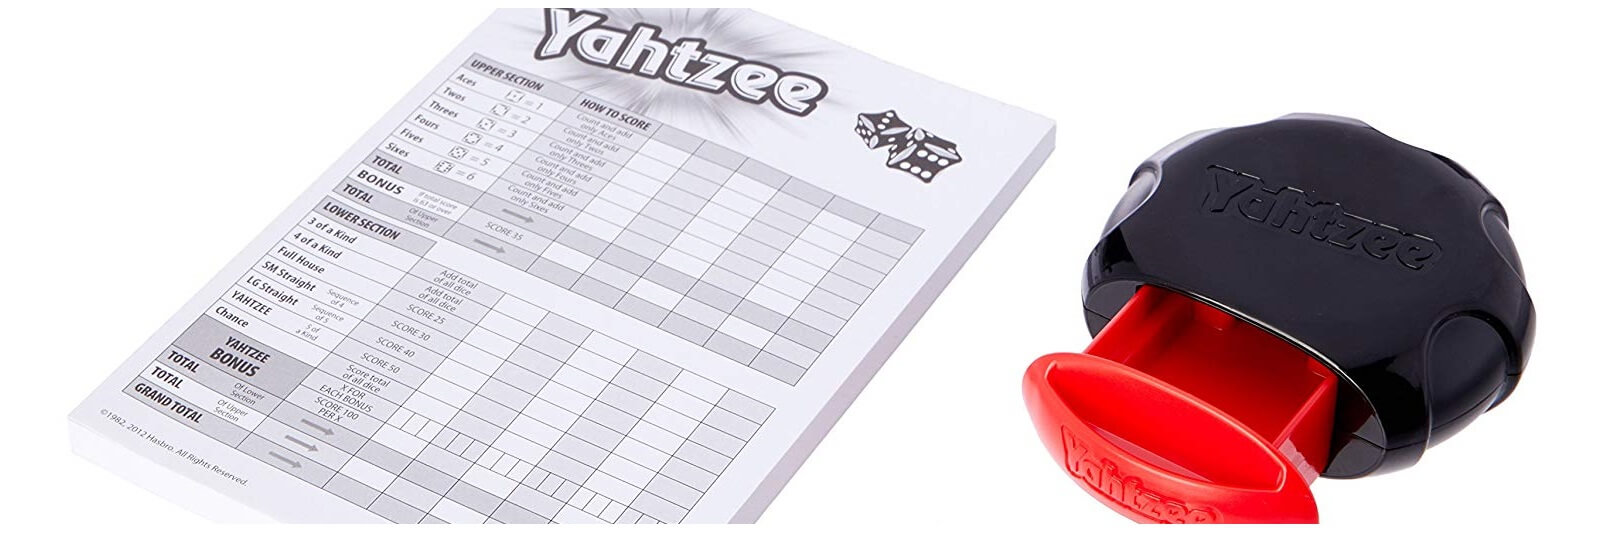 rules of yahtzee board game